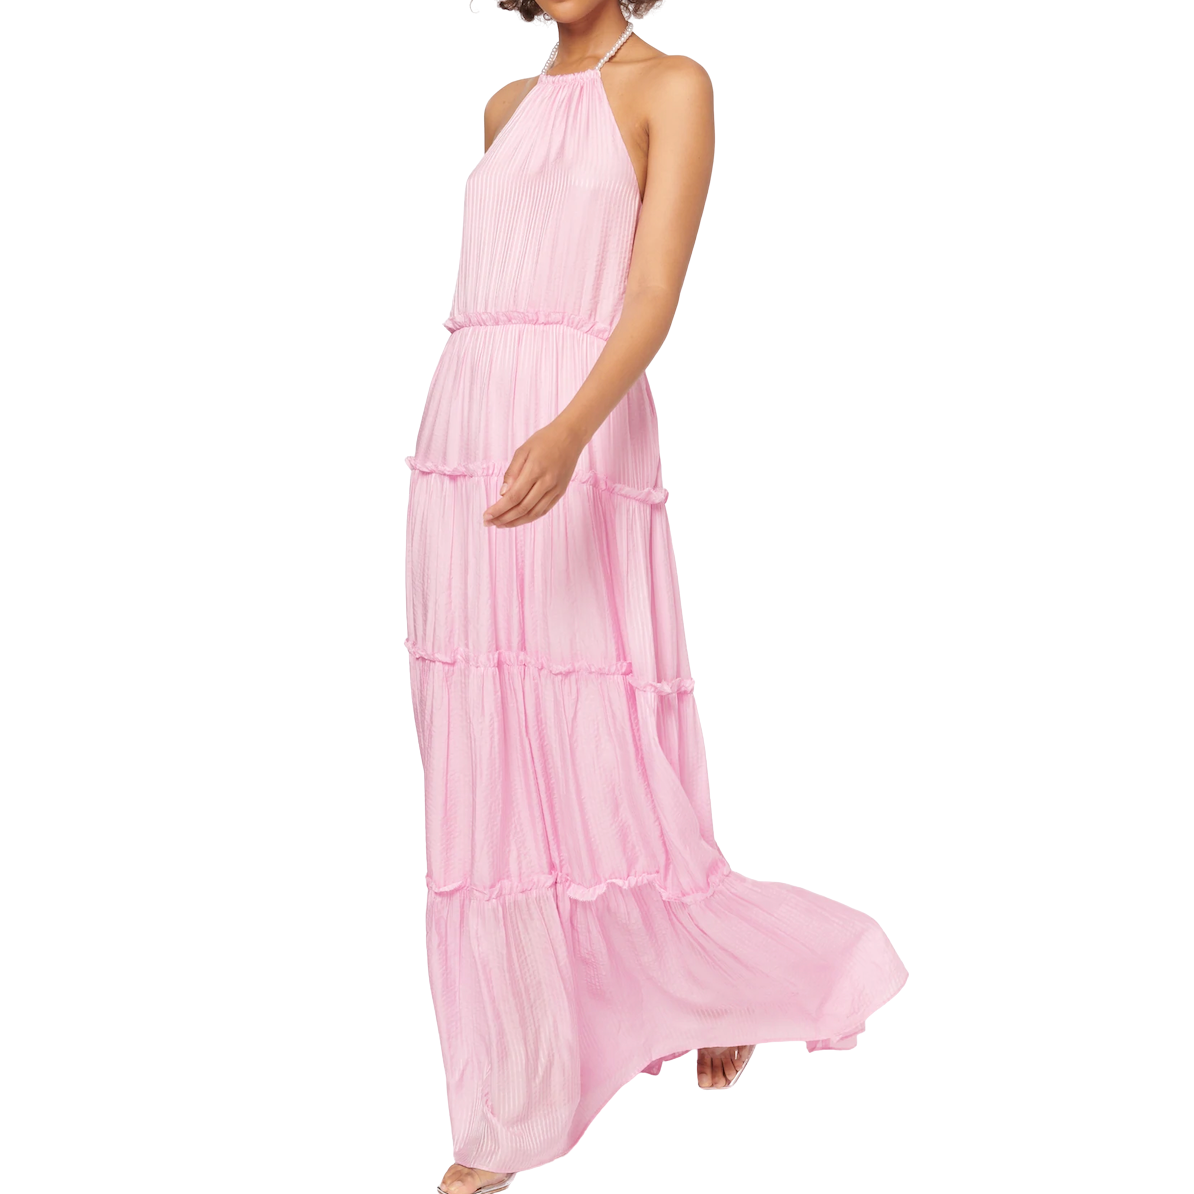 Cami NYC Yanik Confetti Pink Dress